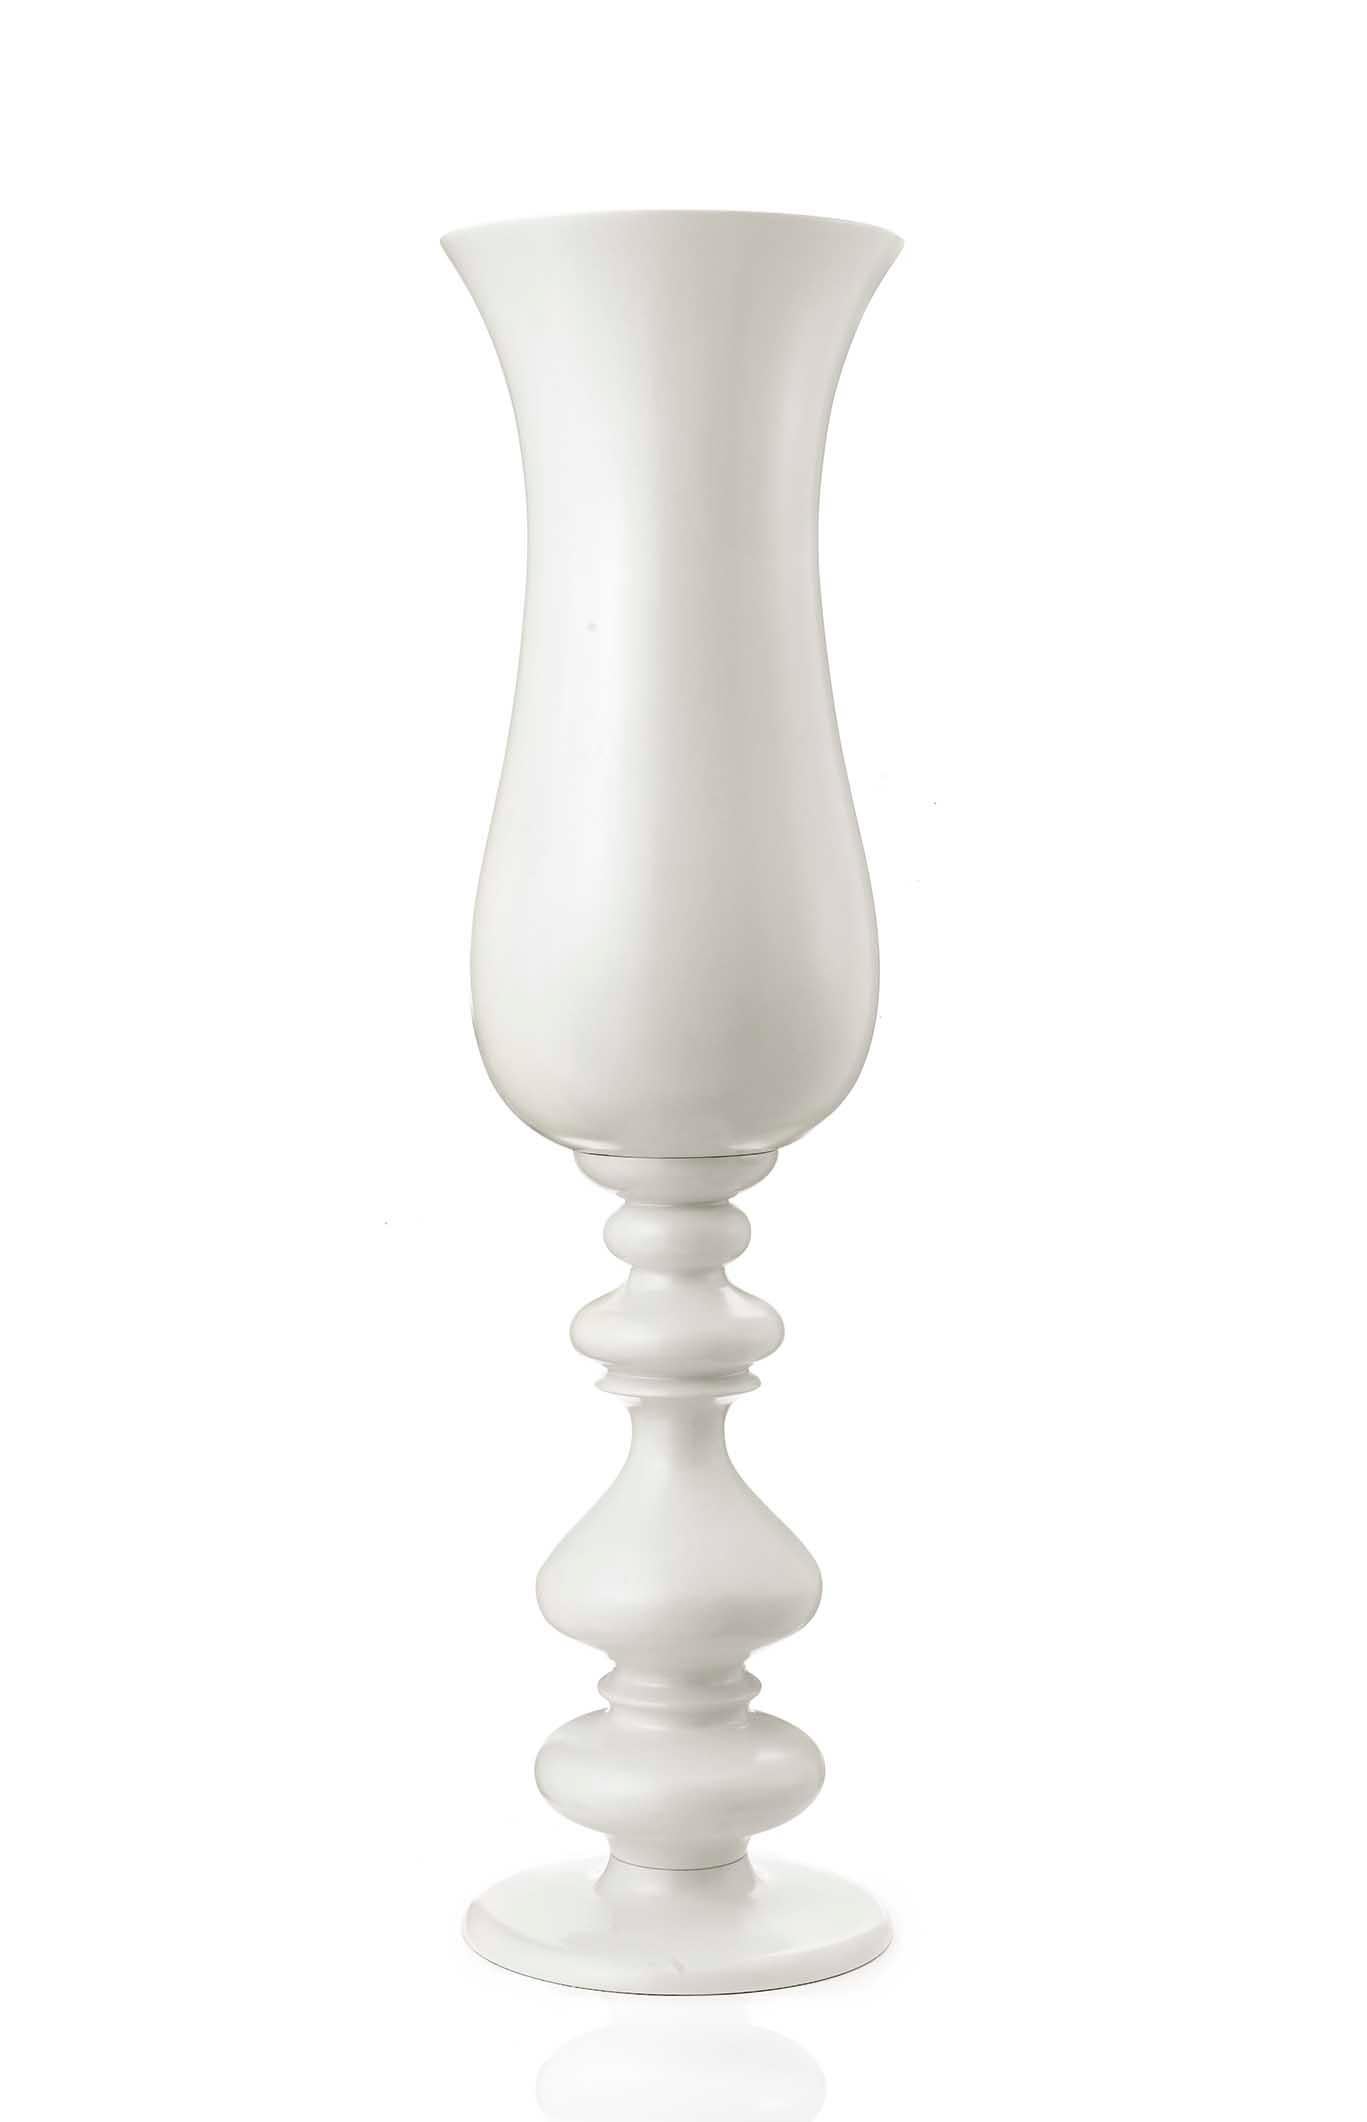 Keramik-Vase LOUIS 
kabeljau. CP300
weiß matt glasiert 

Maßnahmen: 
H. 160.0 cm. 
Dm. 40.0 cm.